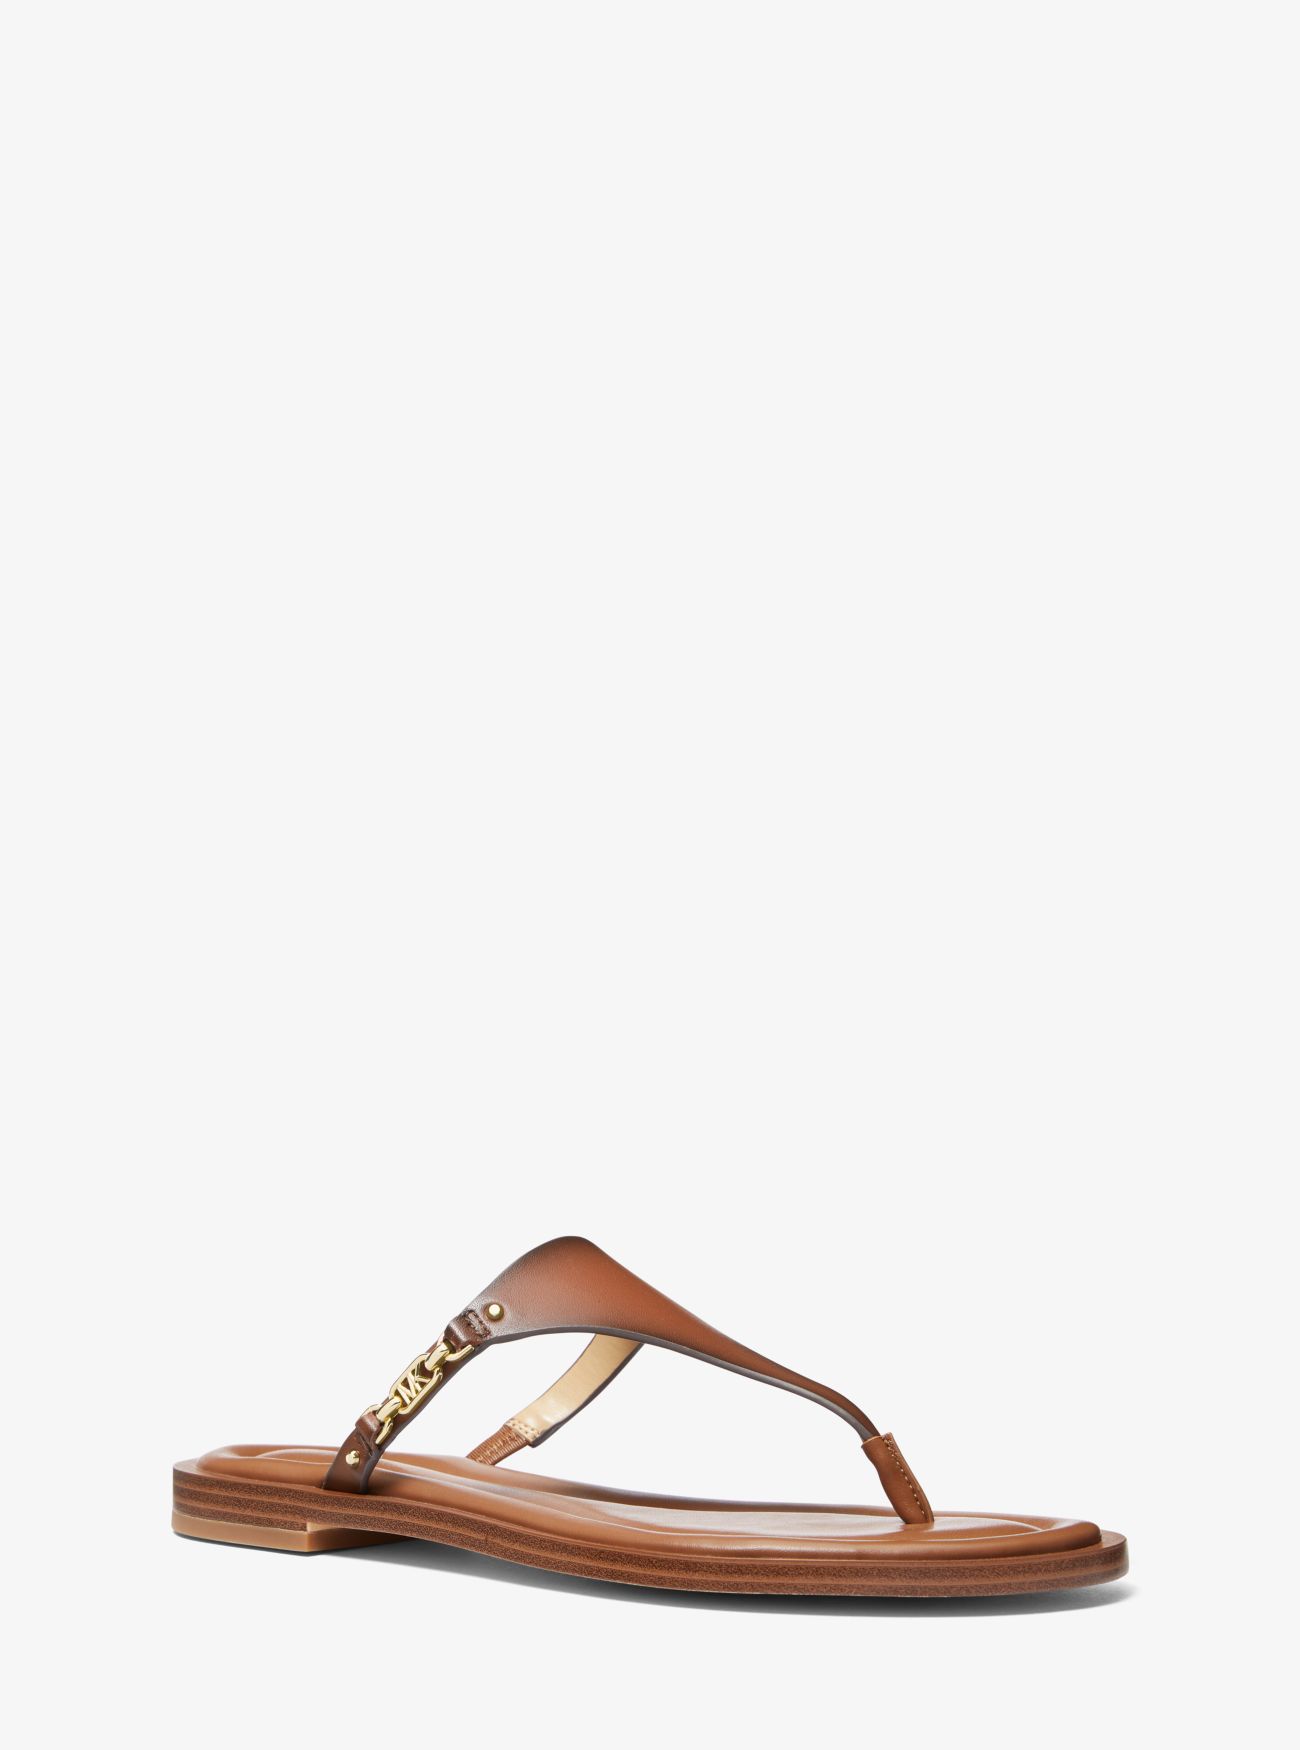 MK Daniella Leather Sandal - Luggage Brown - Michael Kors